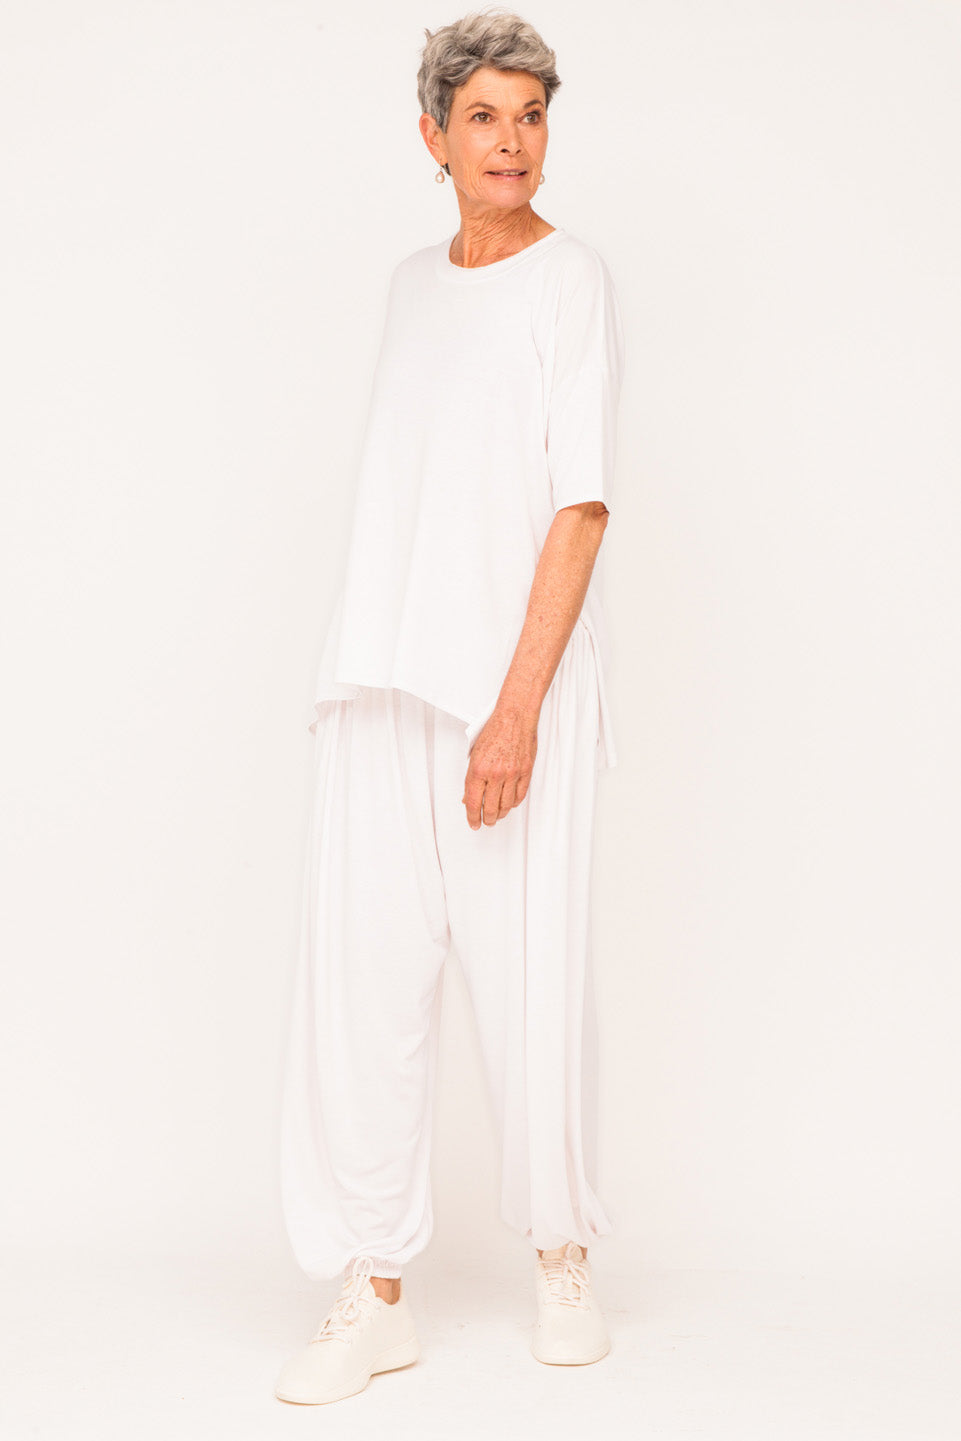 designer-t-shirt-for-women-white-workout-t-shirt-fashion-over-60